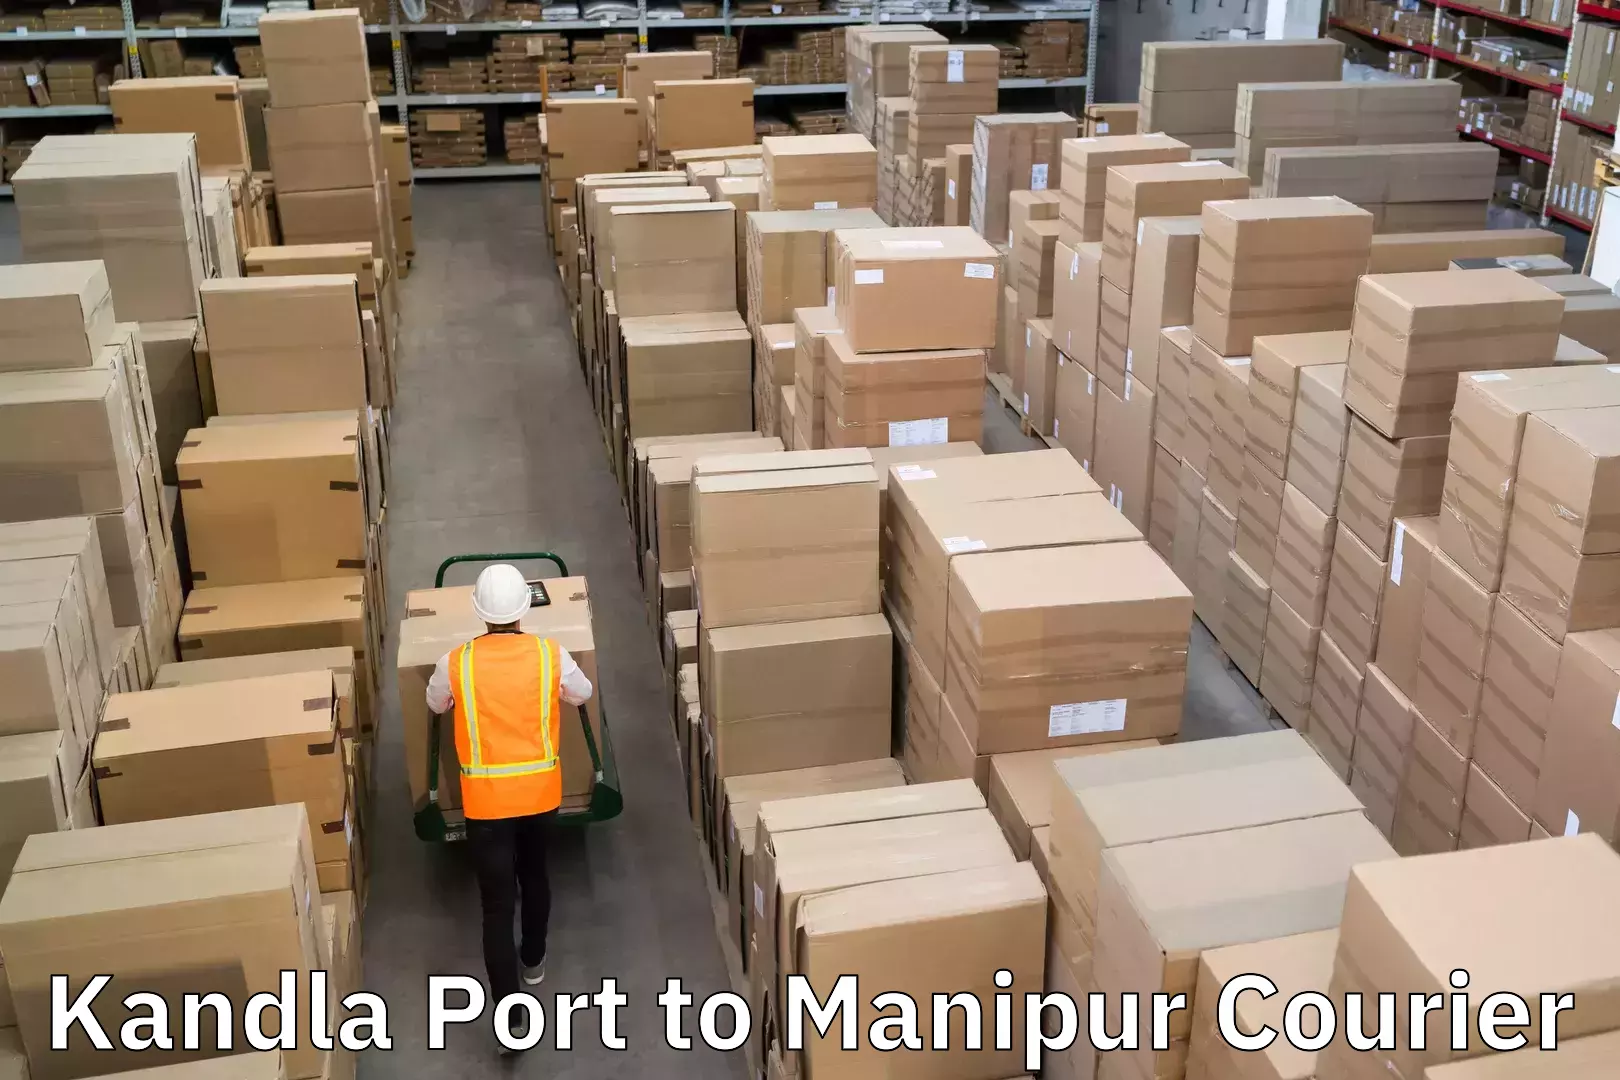 Efficient freight service Kandla Port to Manipur